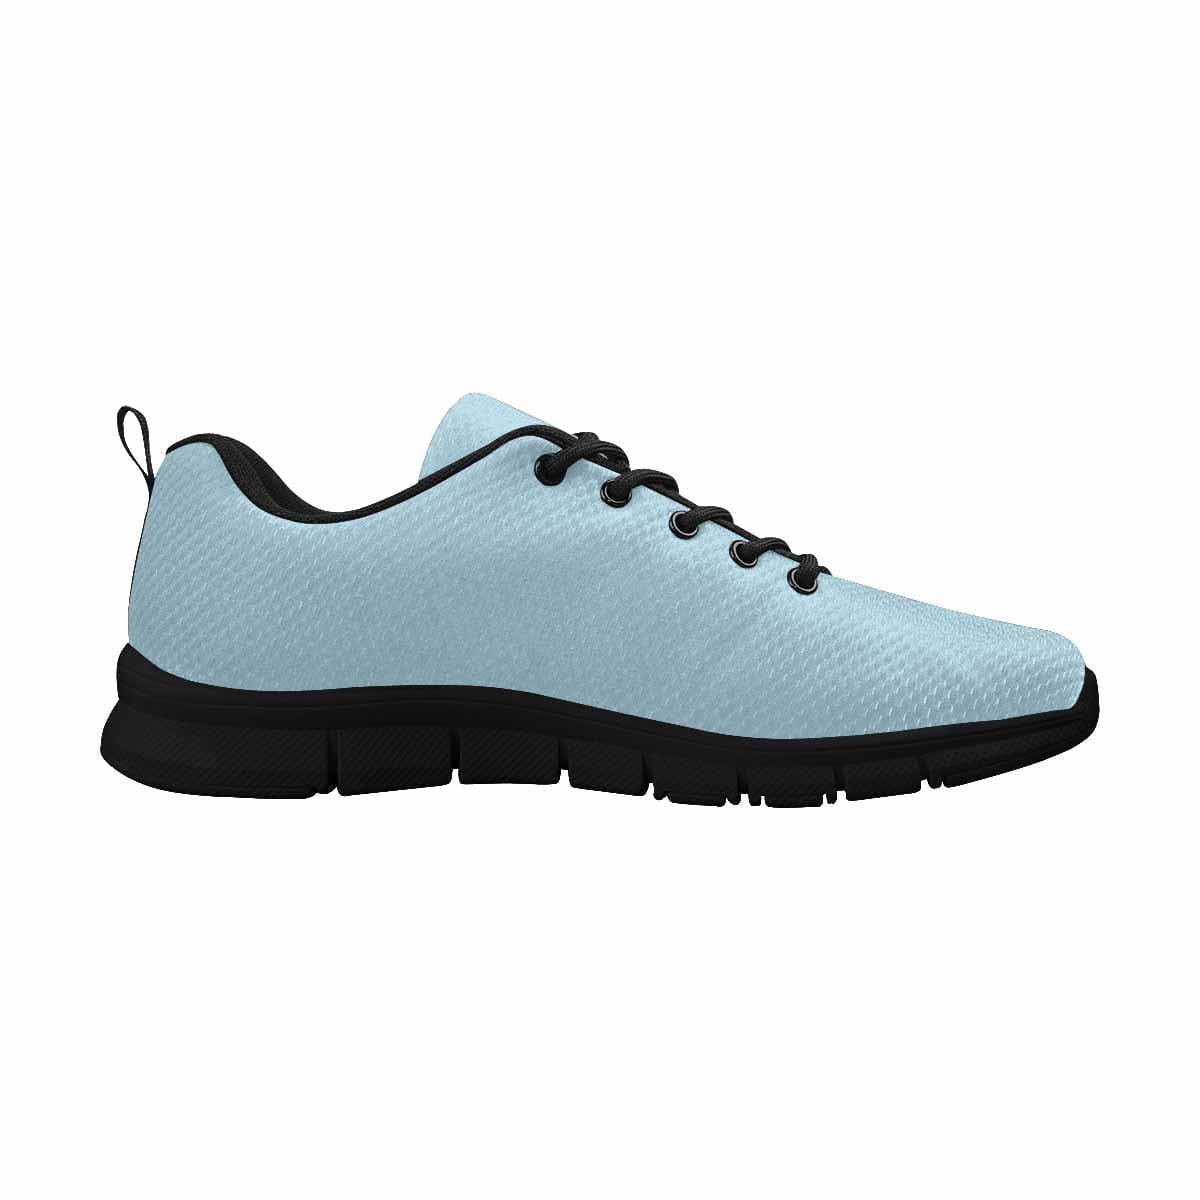 Sneakers For Men Light Blue Running Shoes - Mens | Sneakers | Running